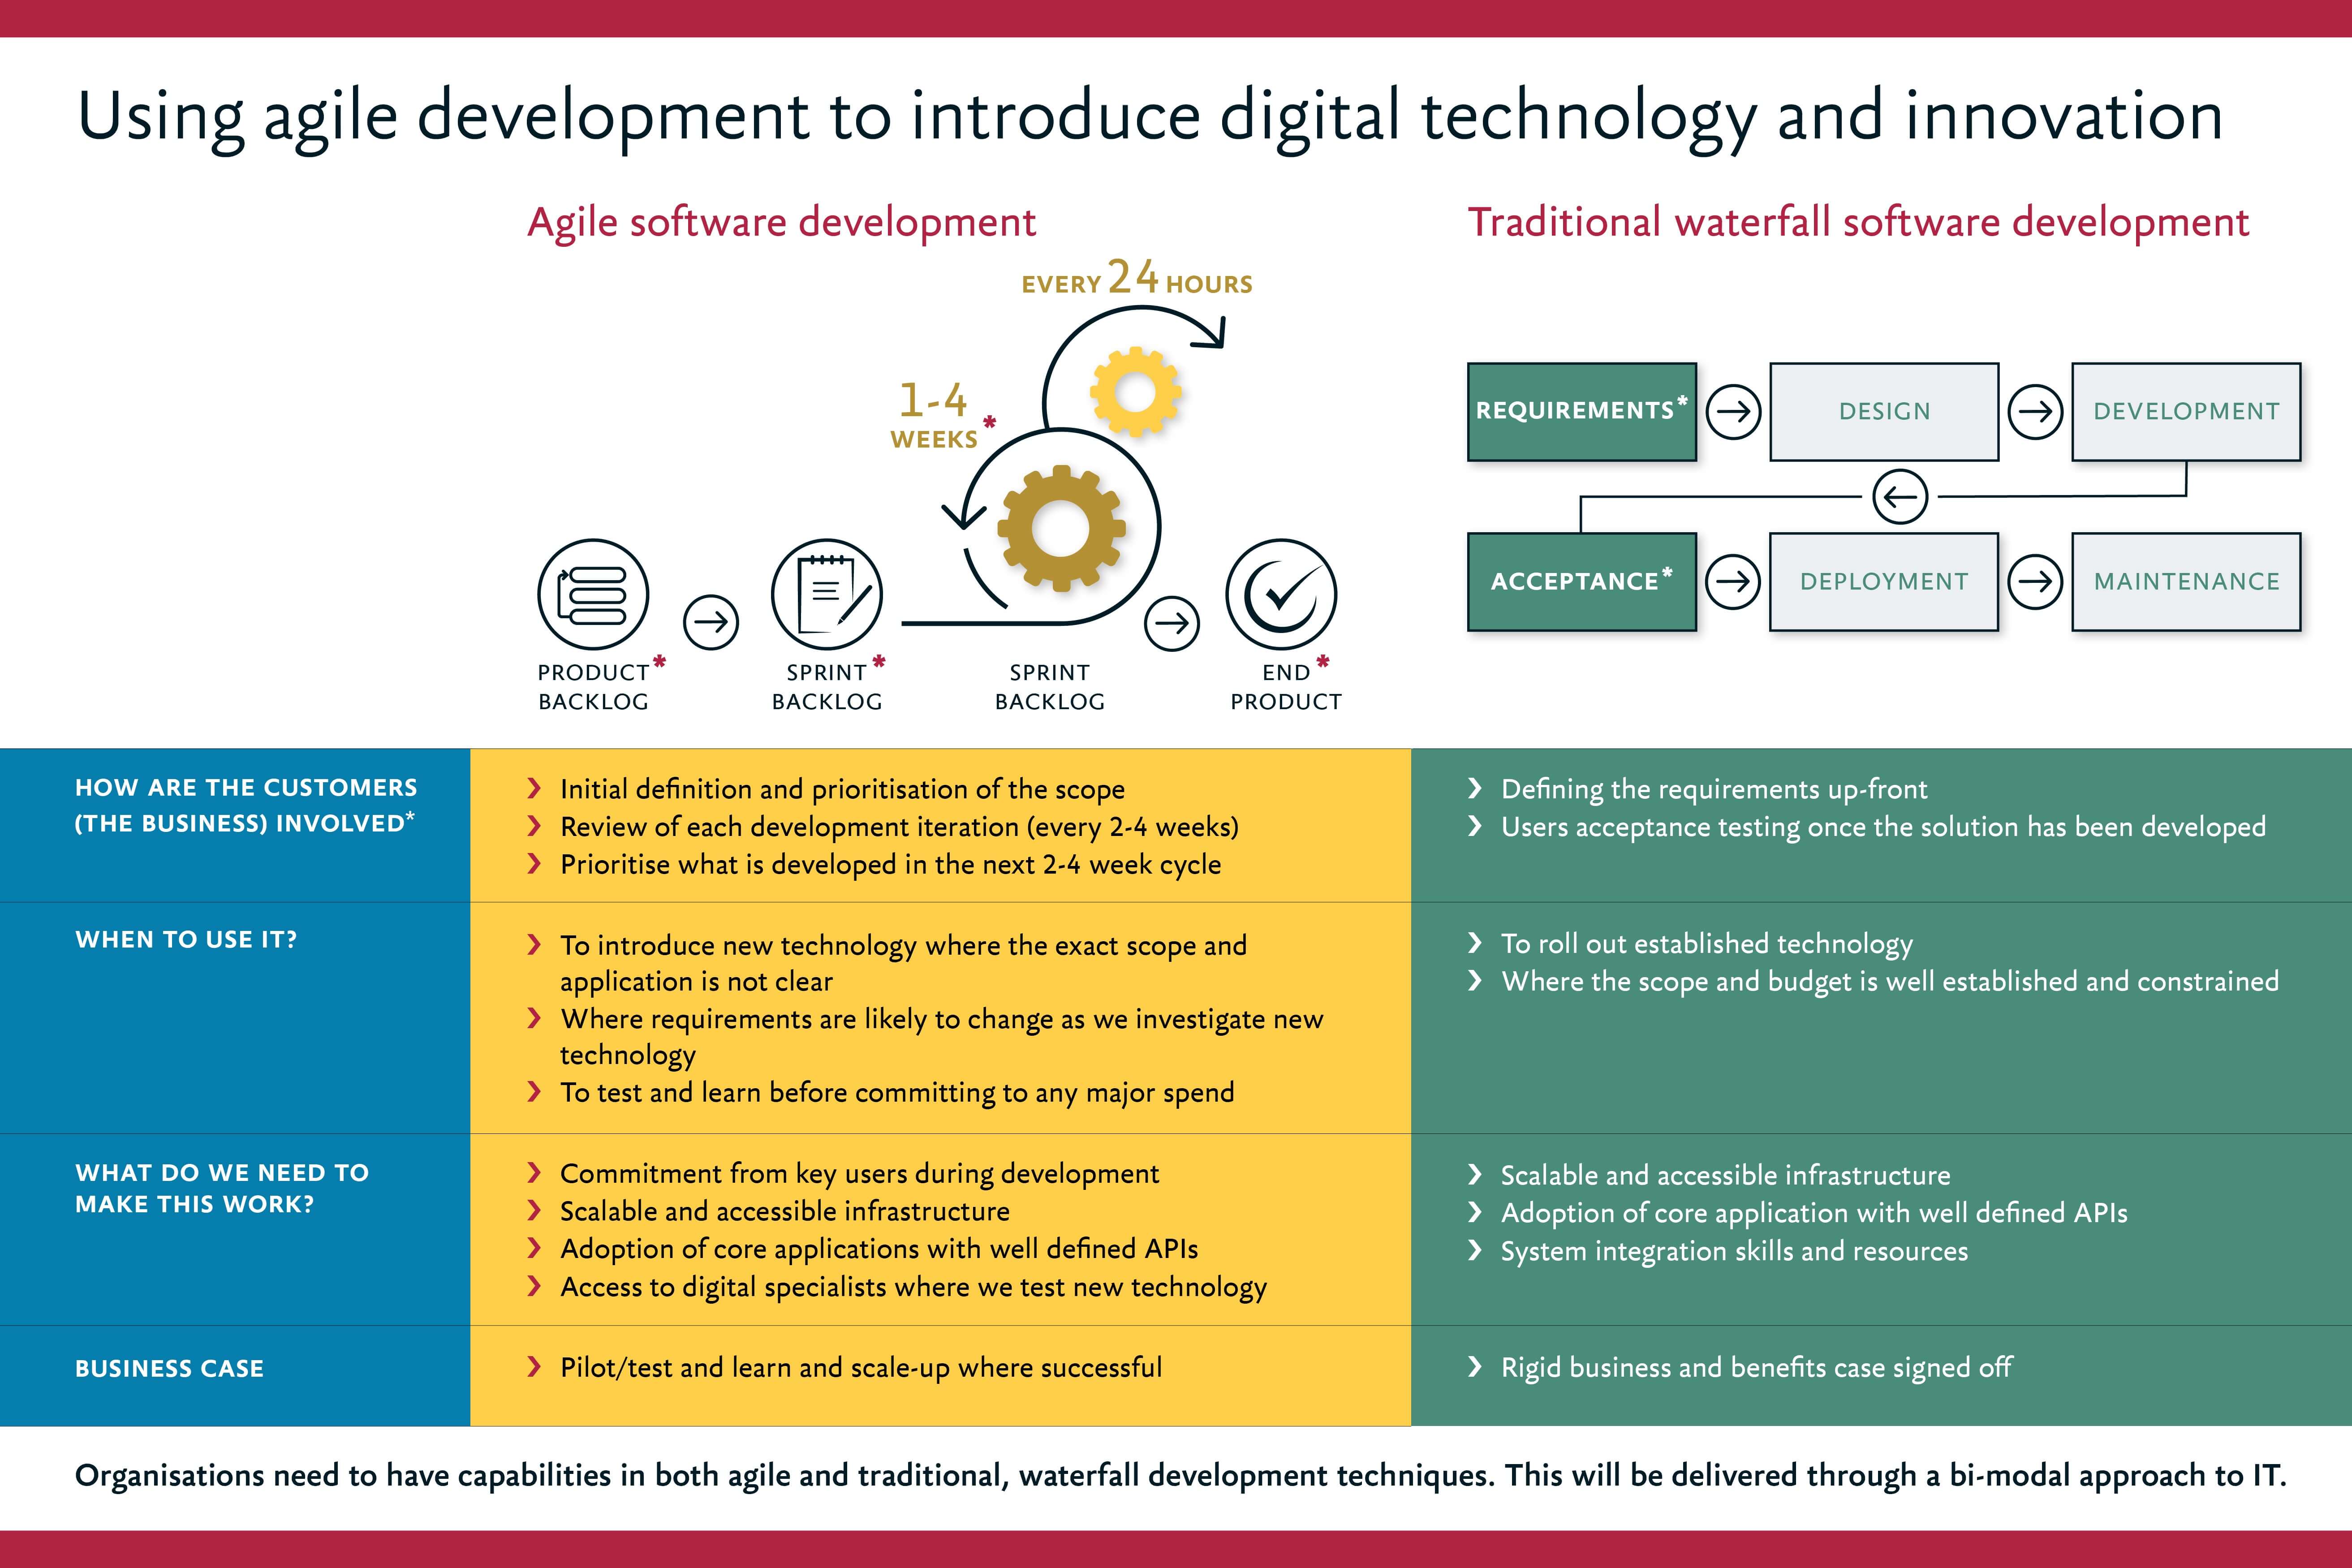 Using-Agile-development-to-introduce-digital-technology-and-innovation.jpg